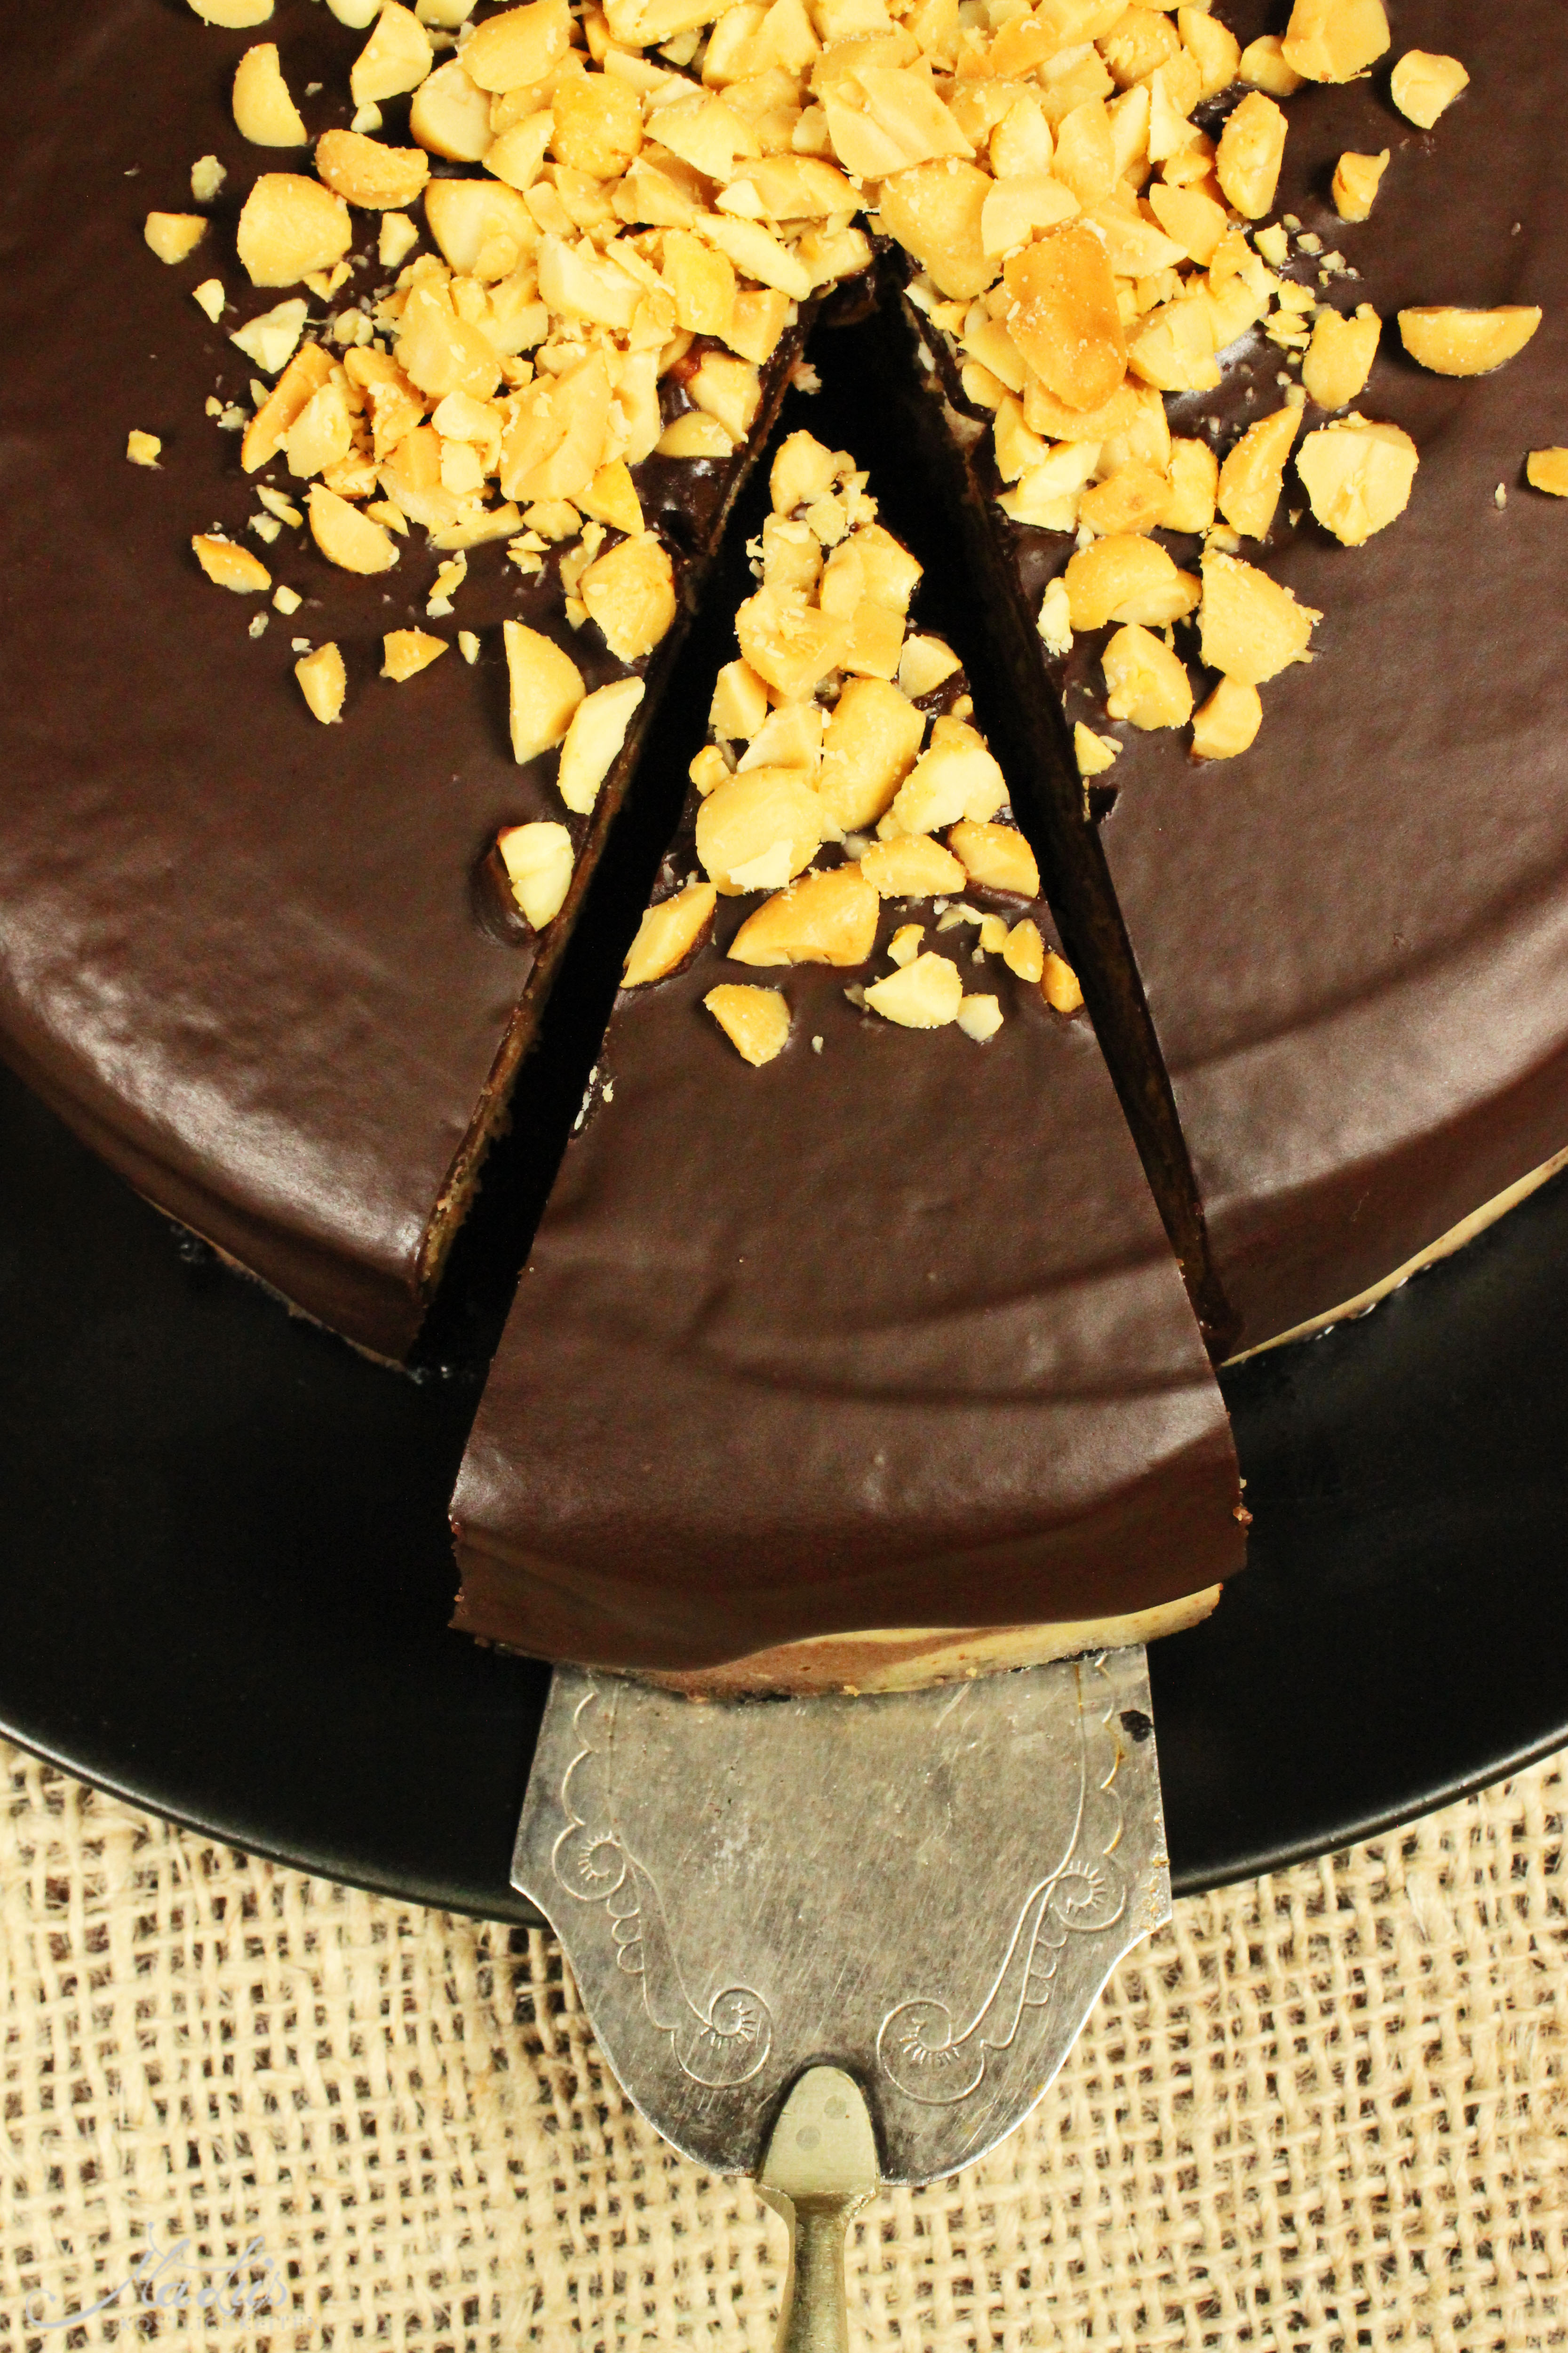 Chocolate-Peanutbutter Cheesecake